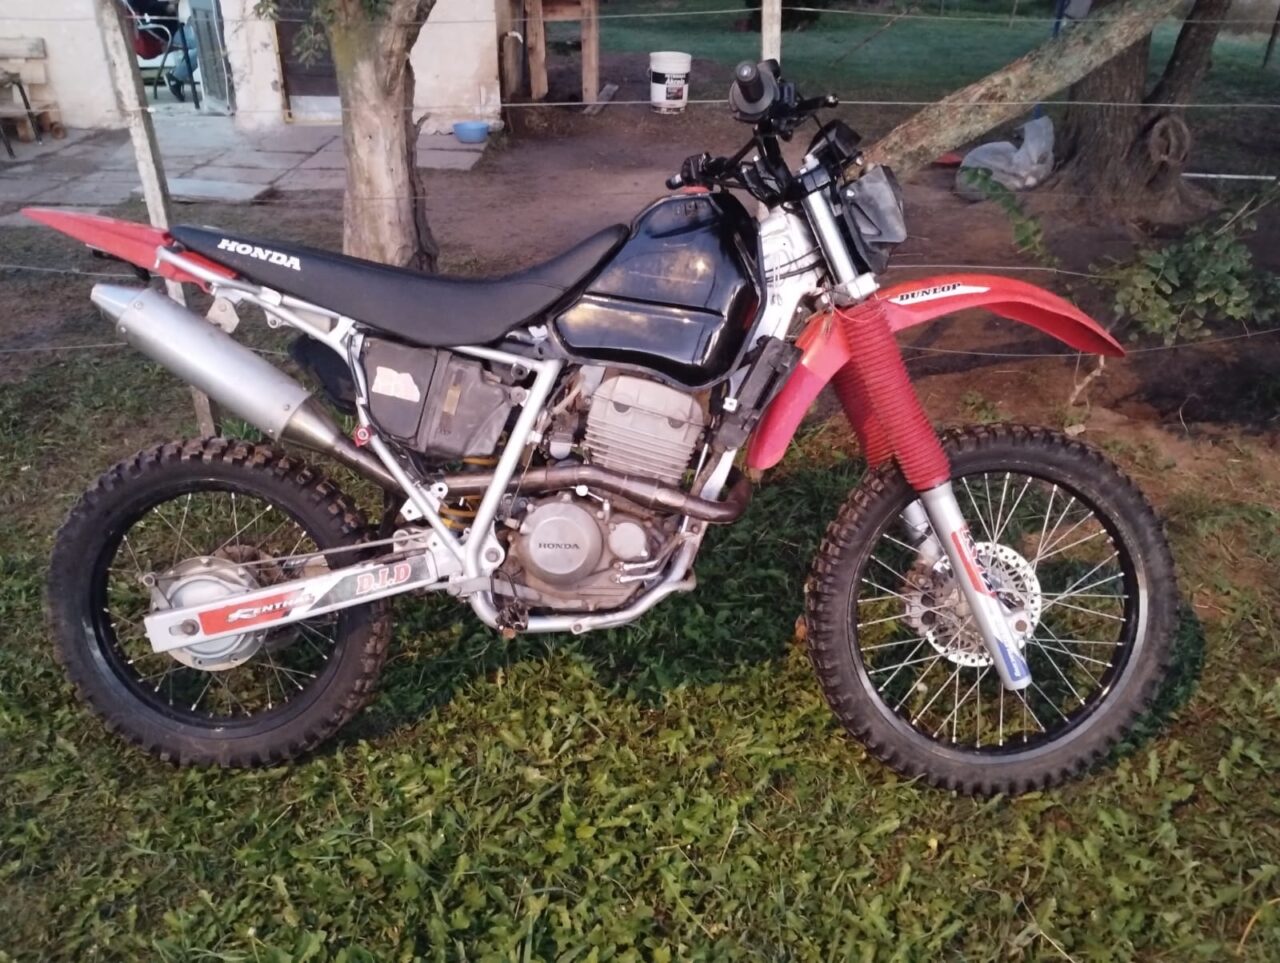 Rufino: hallaron una moto robada en Laboulaye